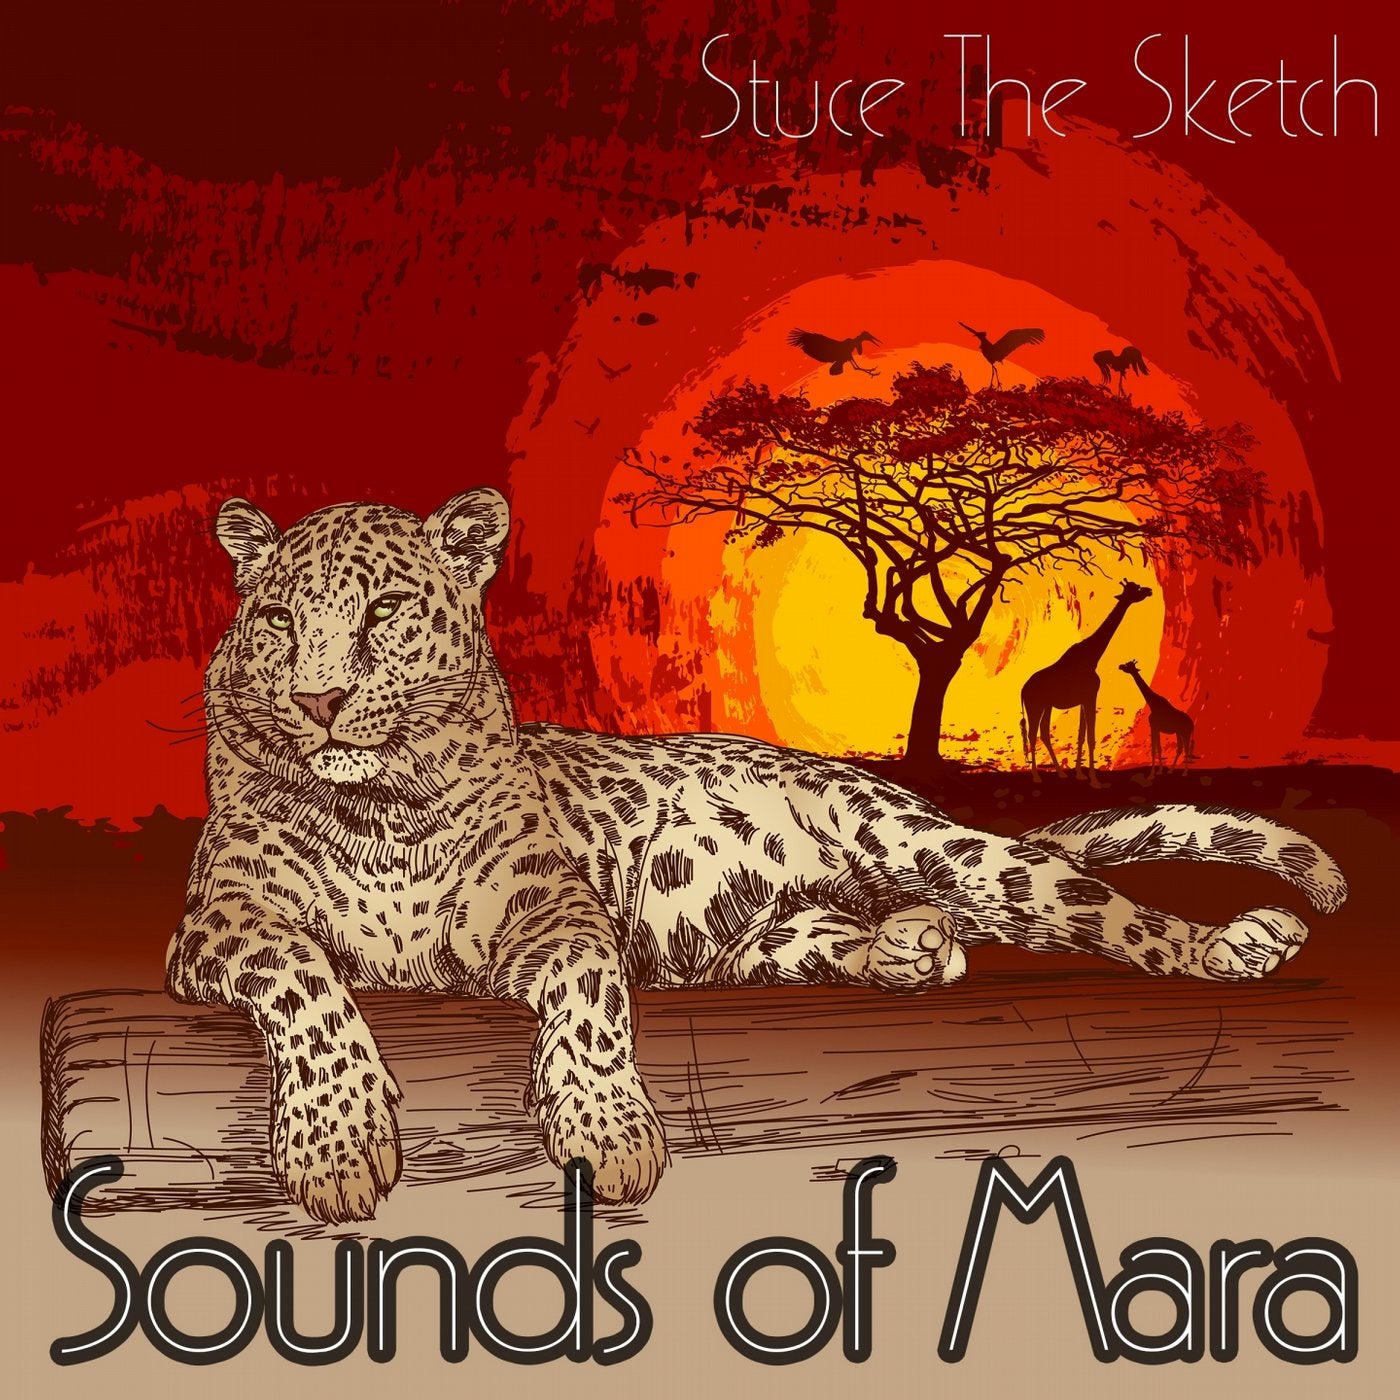 Sounds of Mara